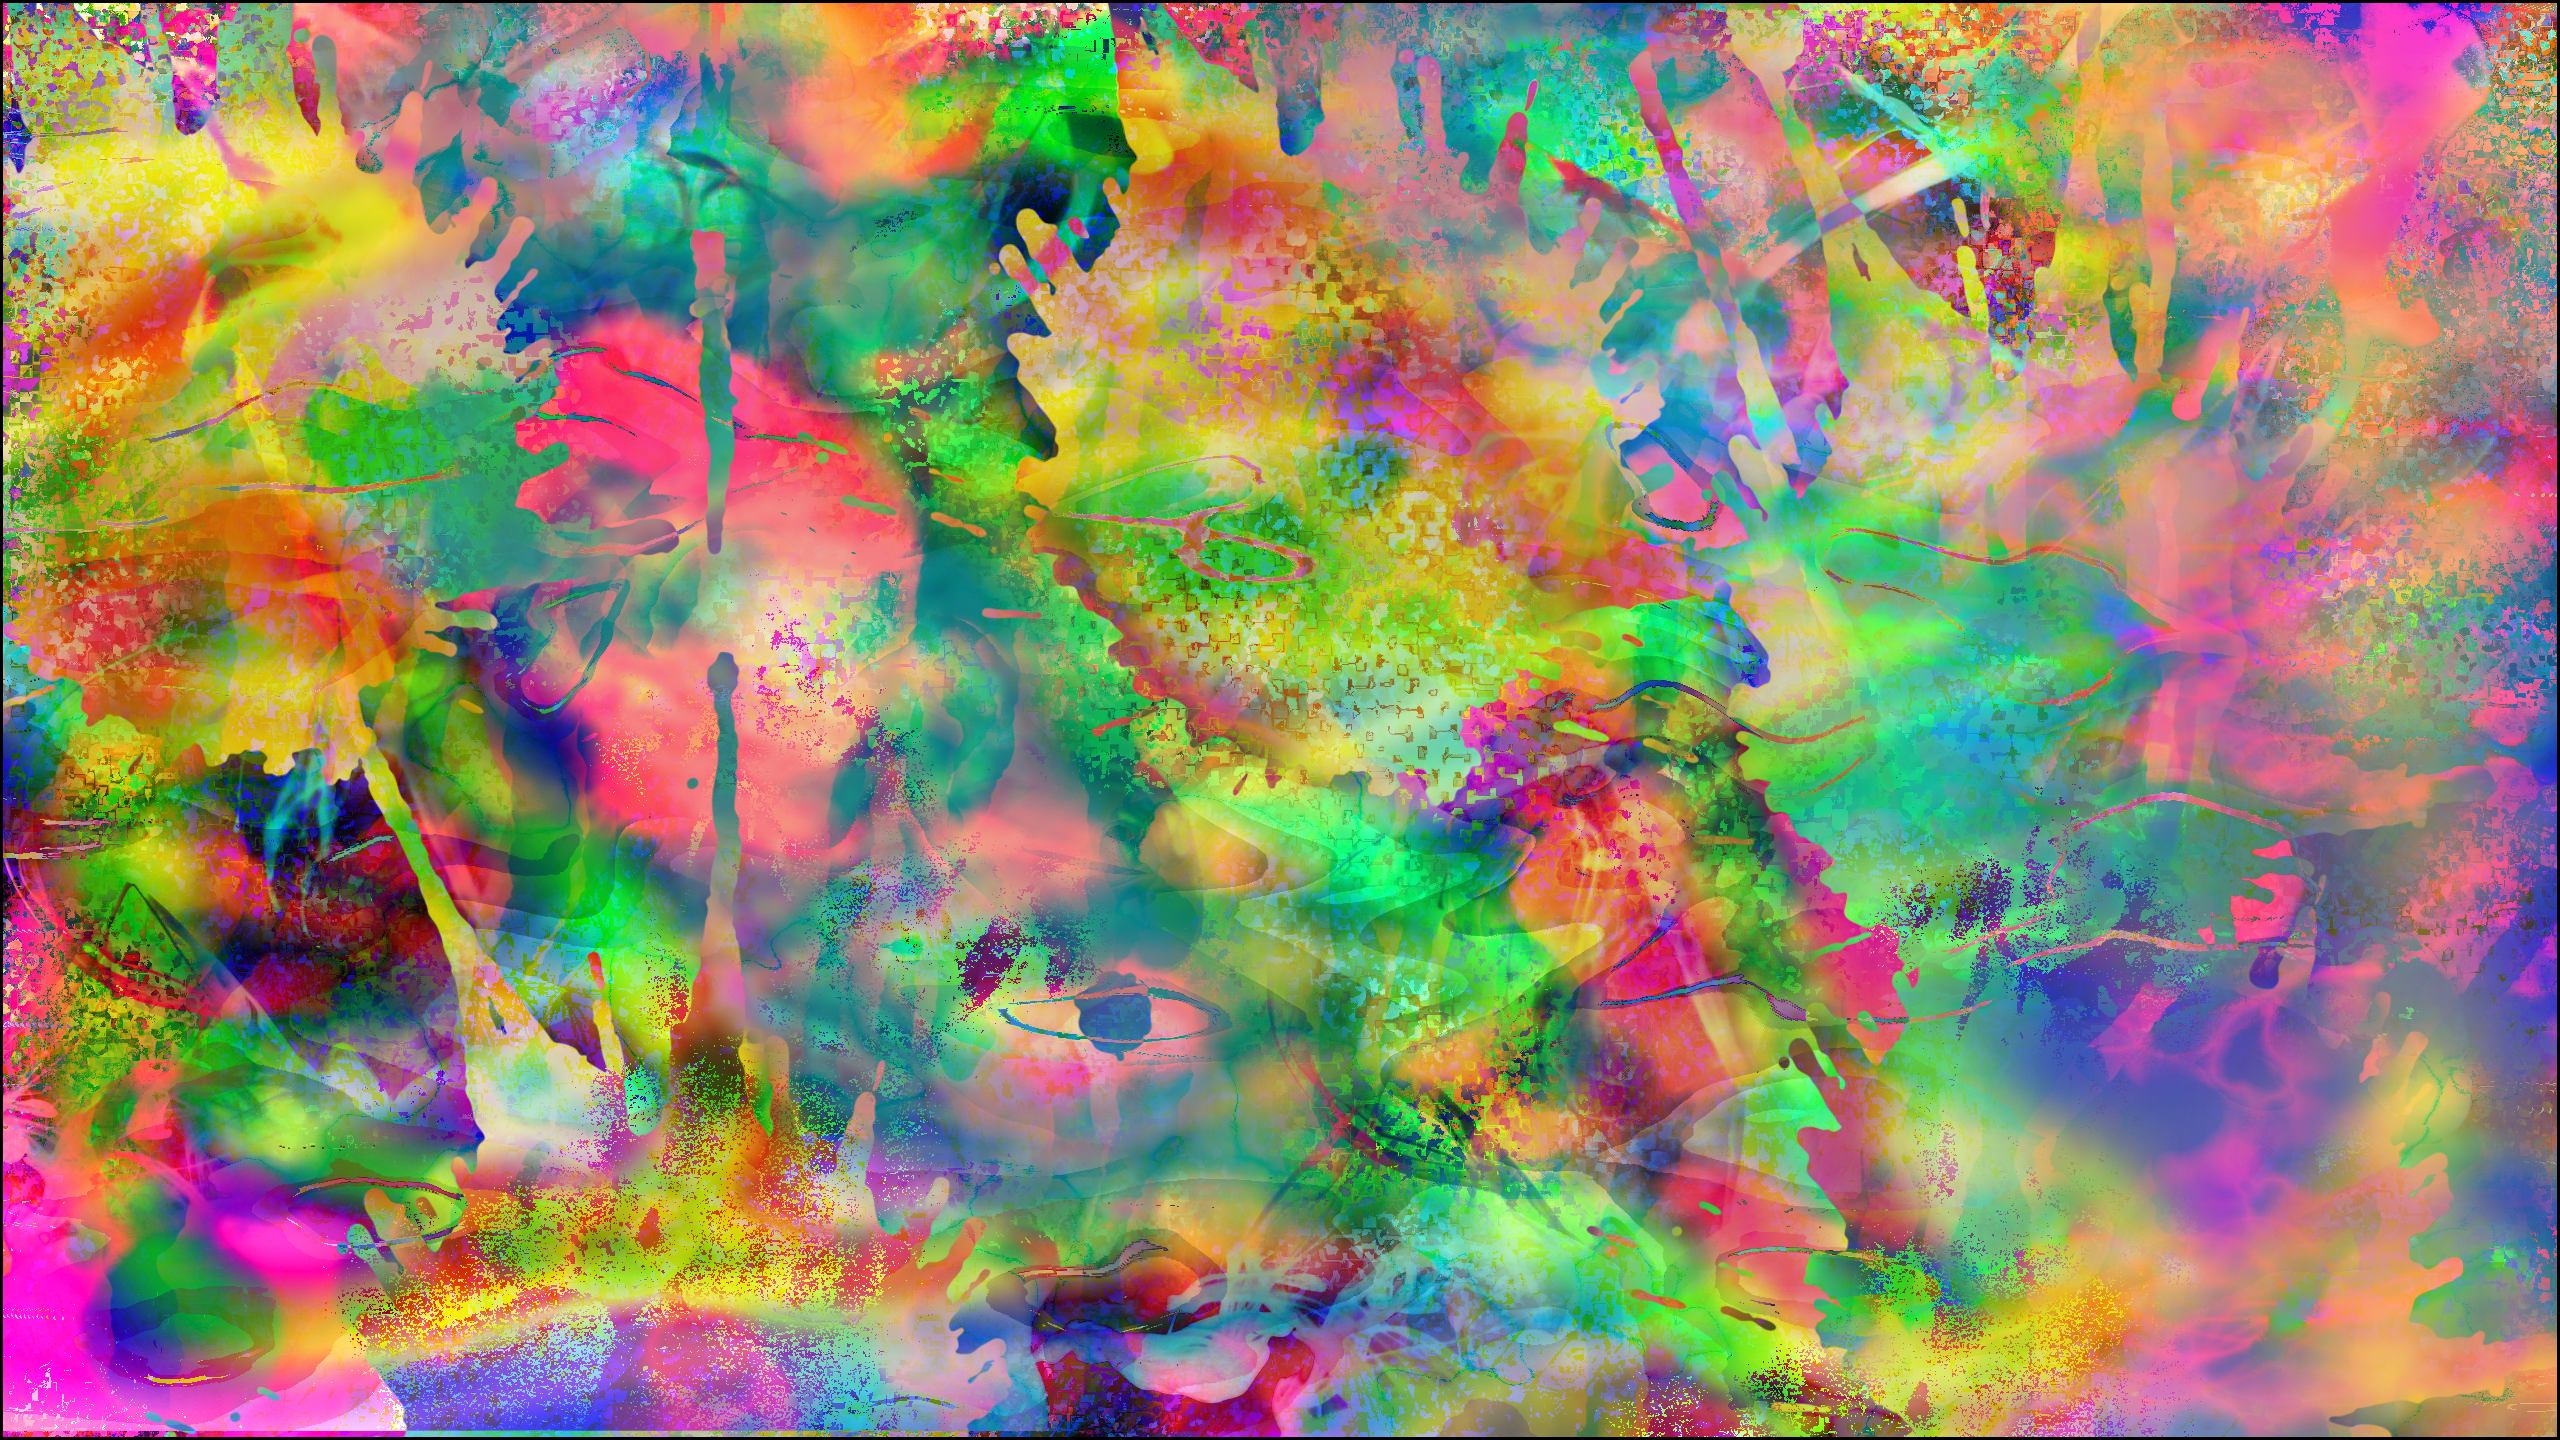 General 2560x1440 abstract LSD brightness trippy psychedelic digital art surreal artwork